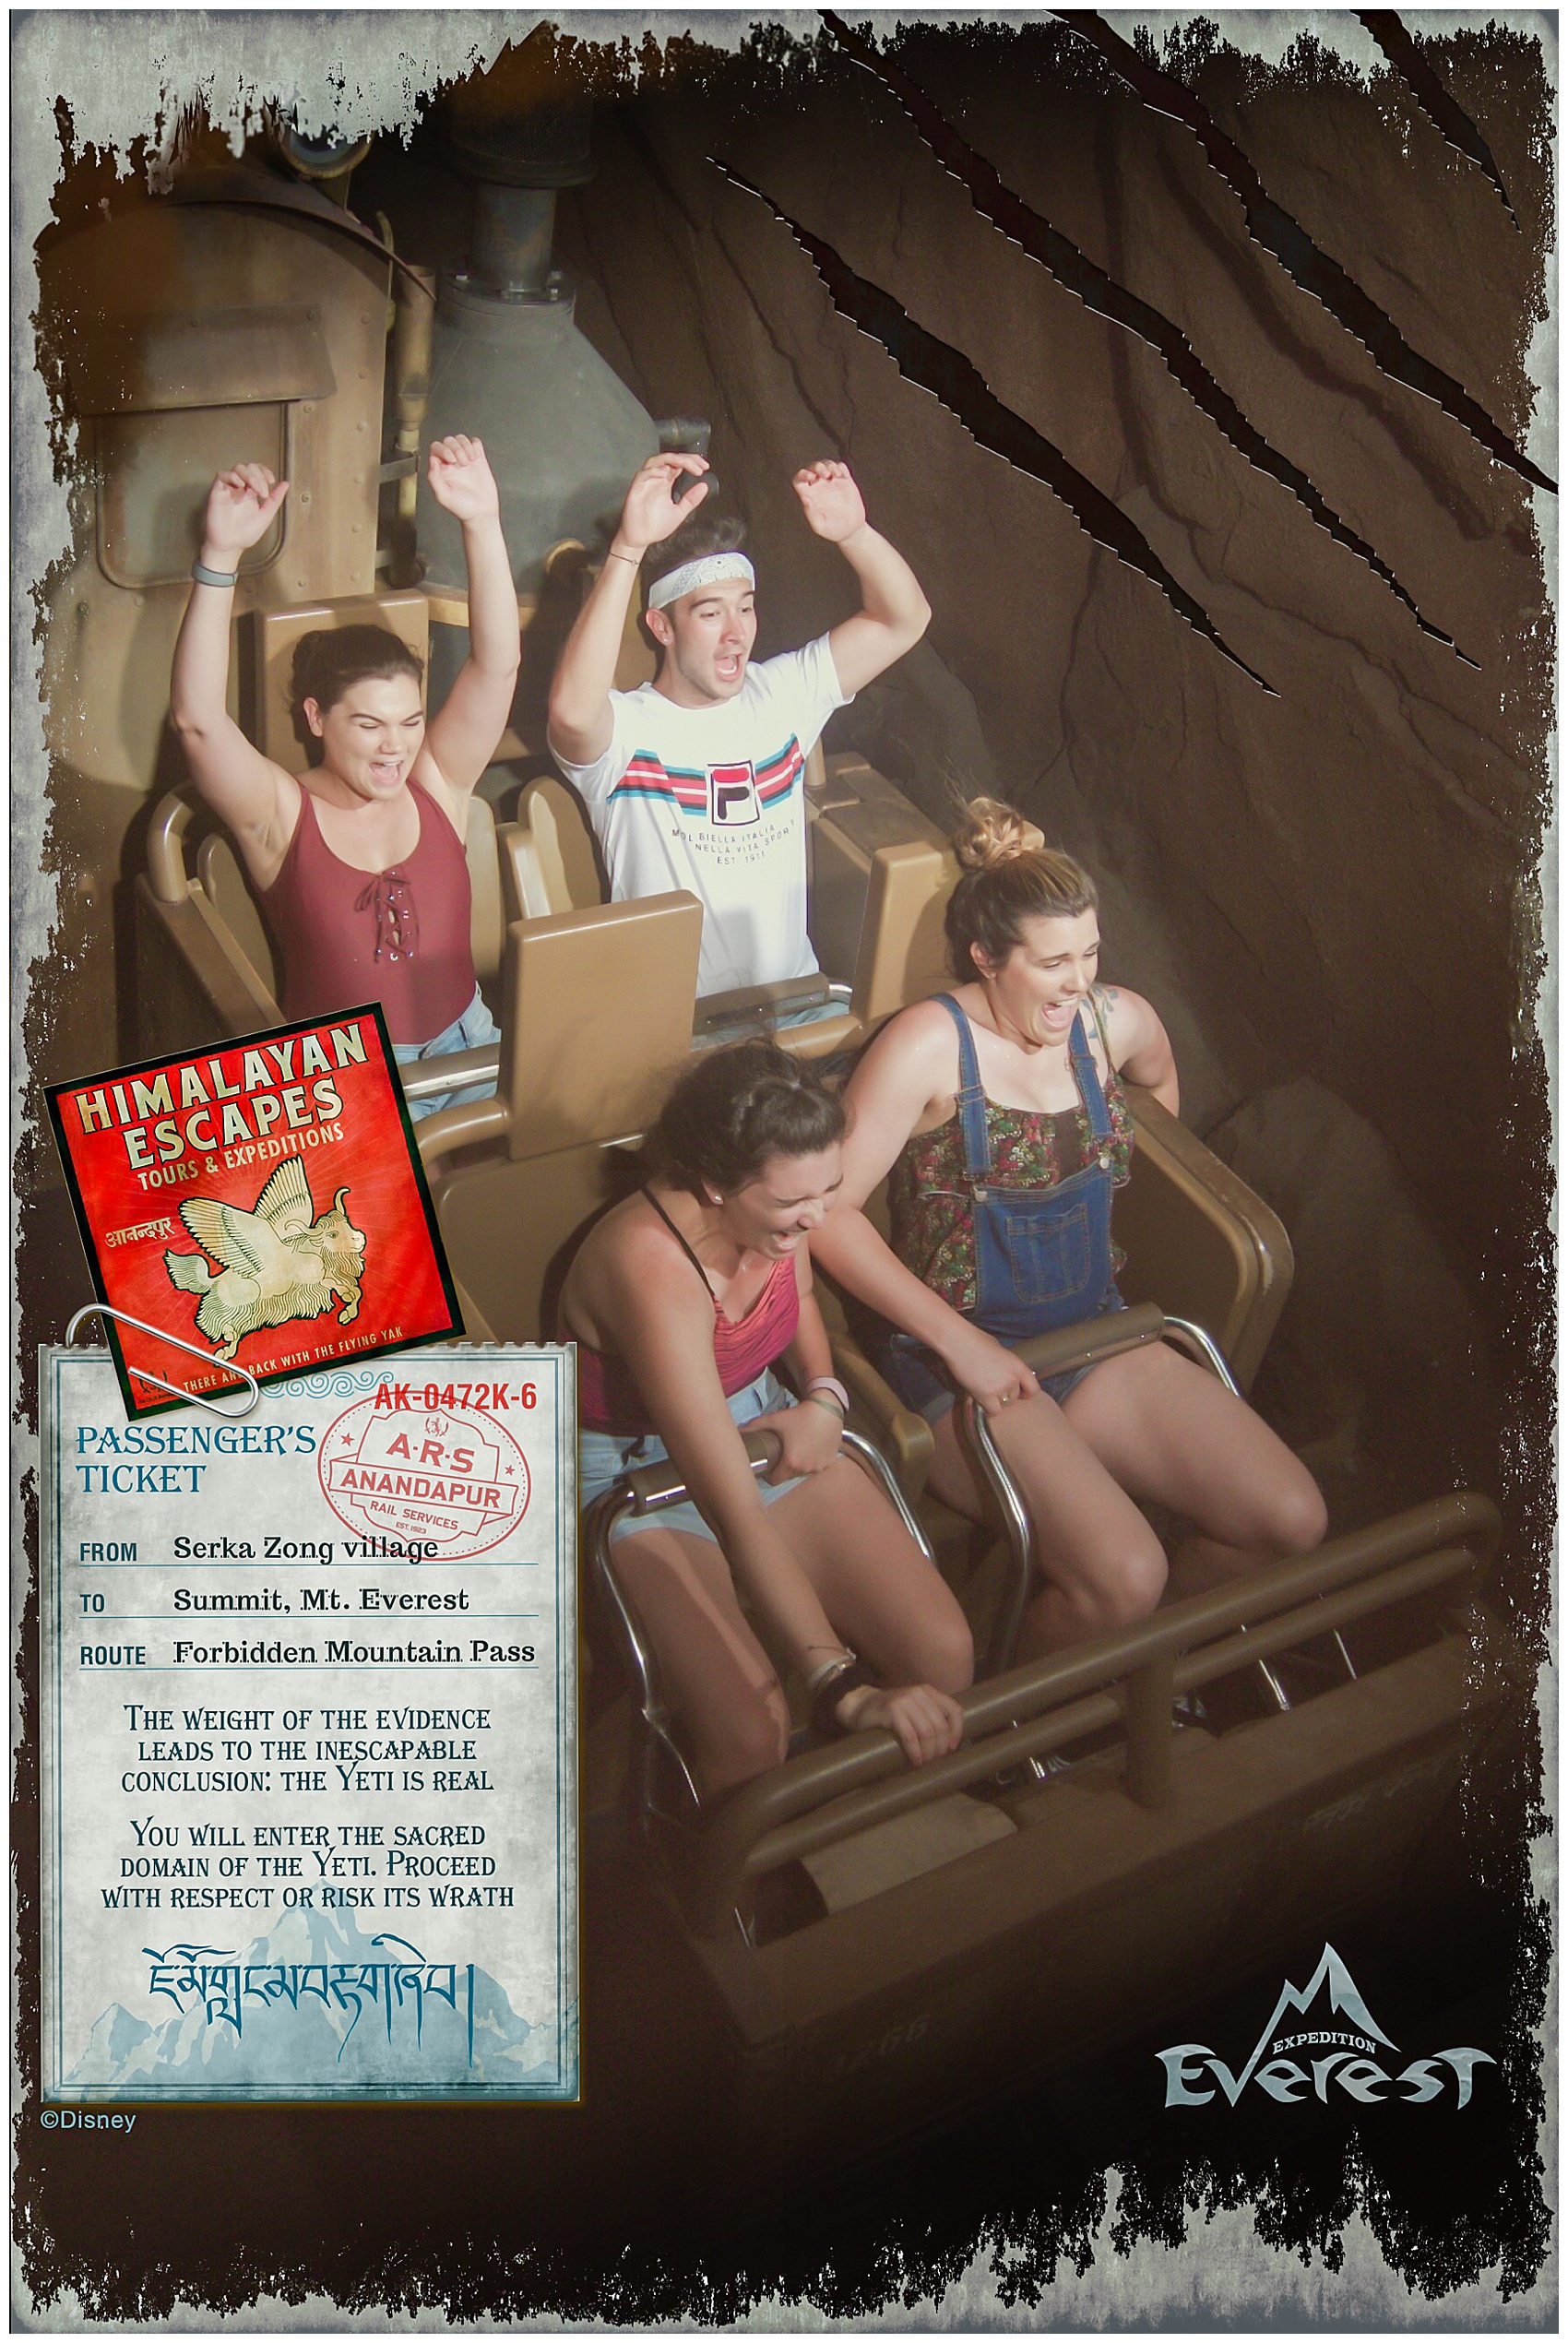 Roller coaster at Disney World